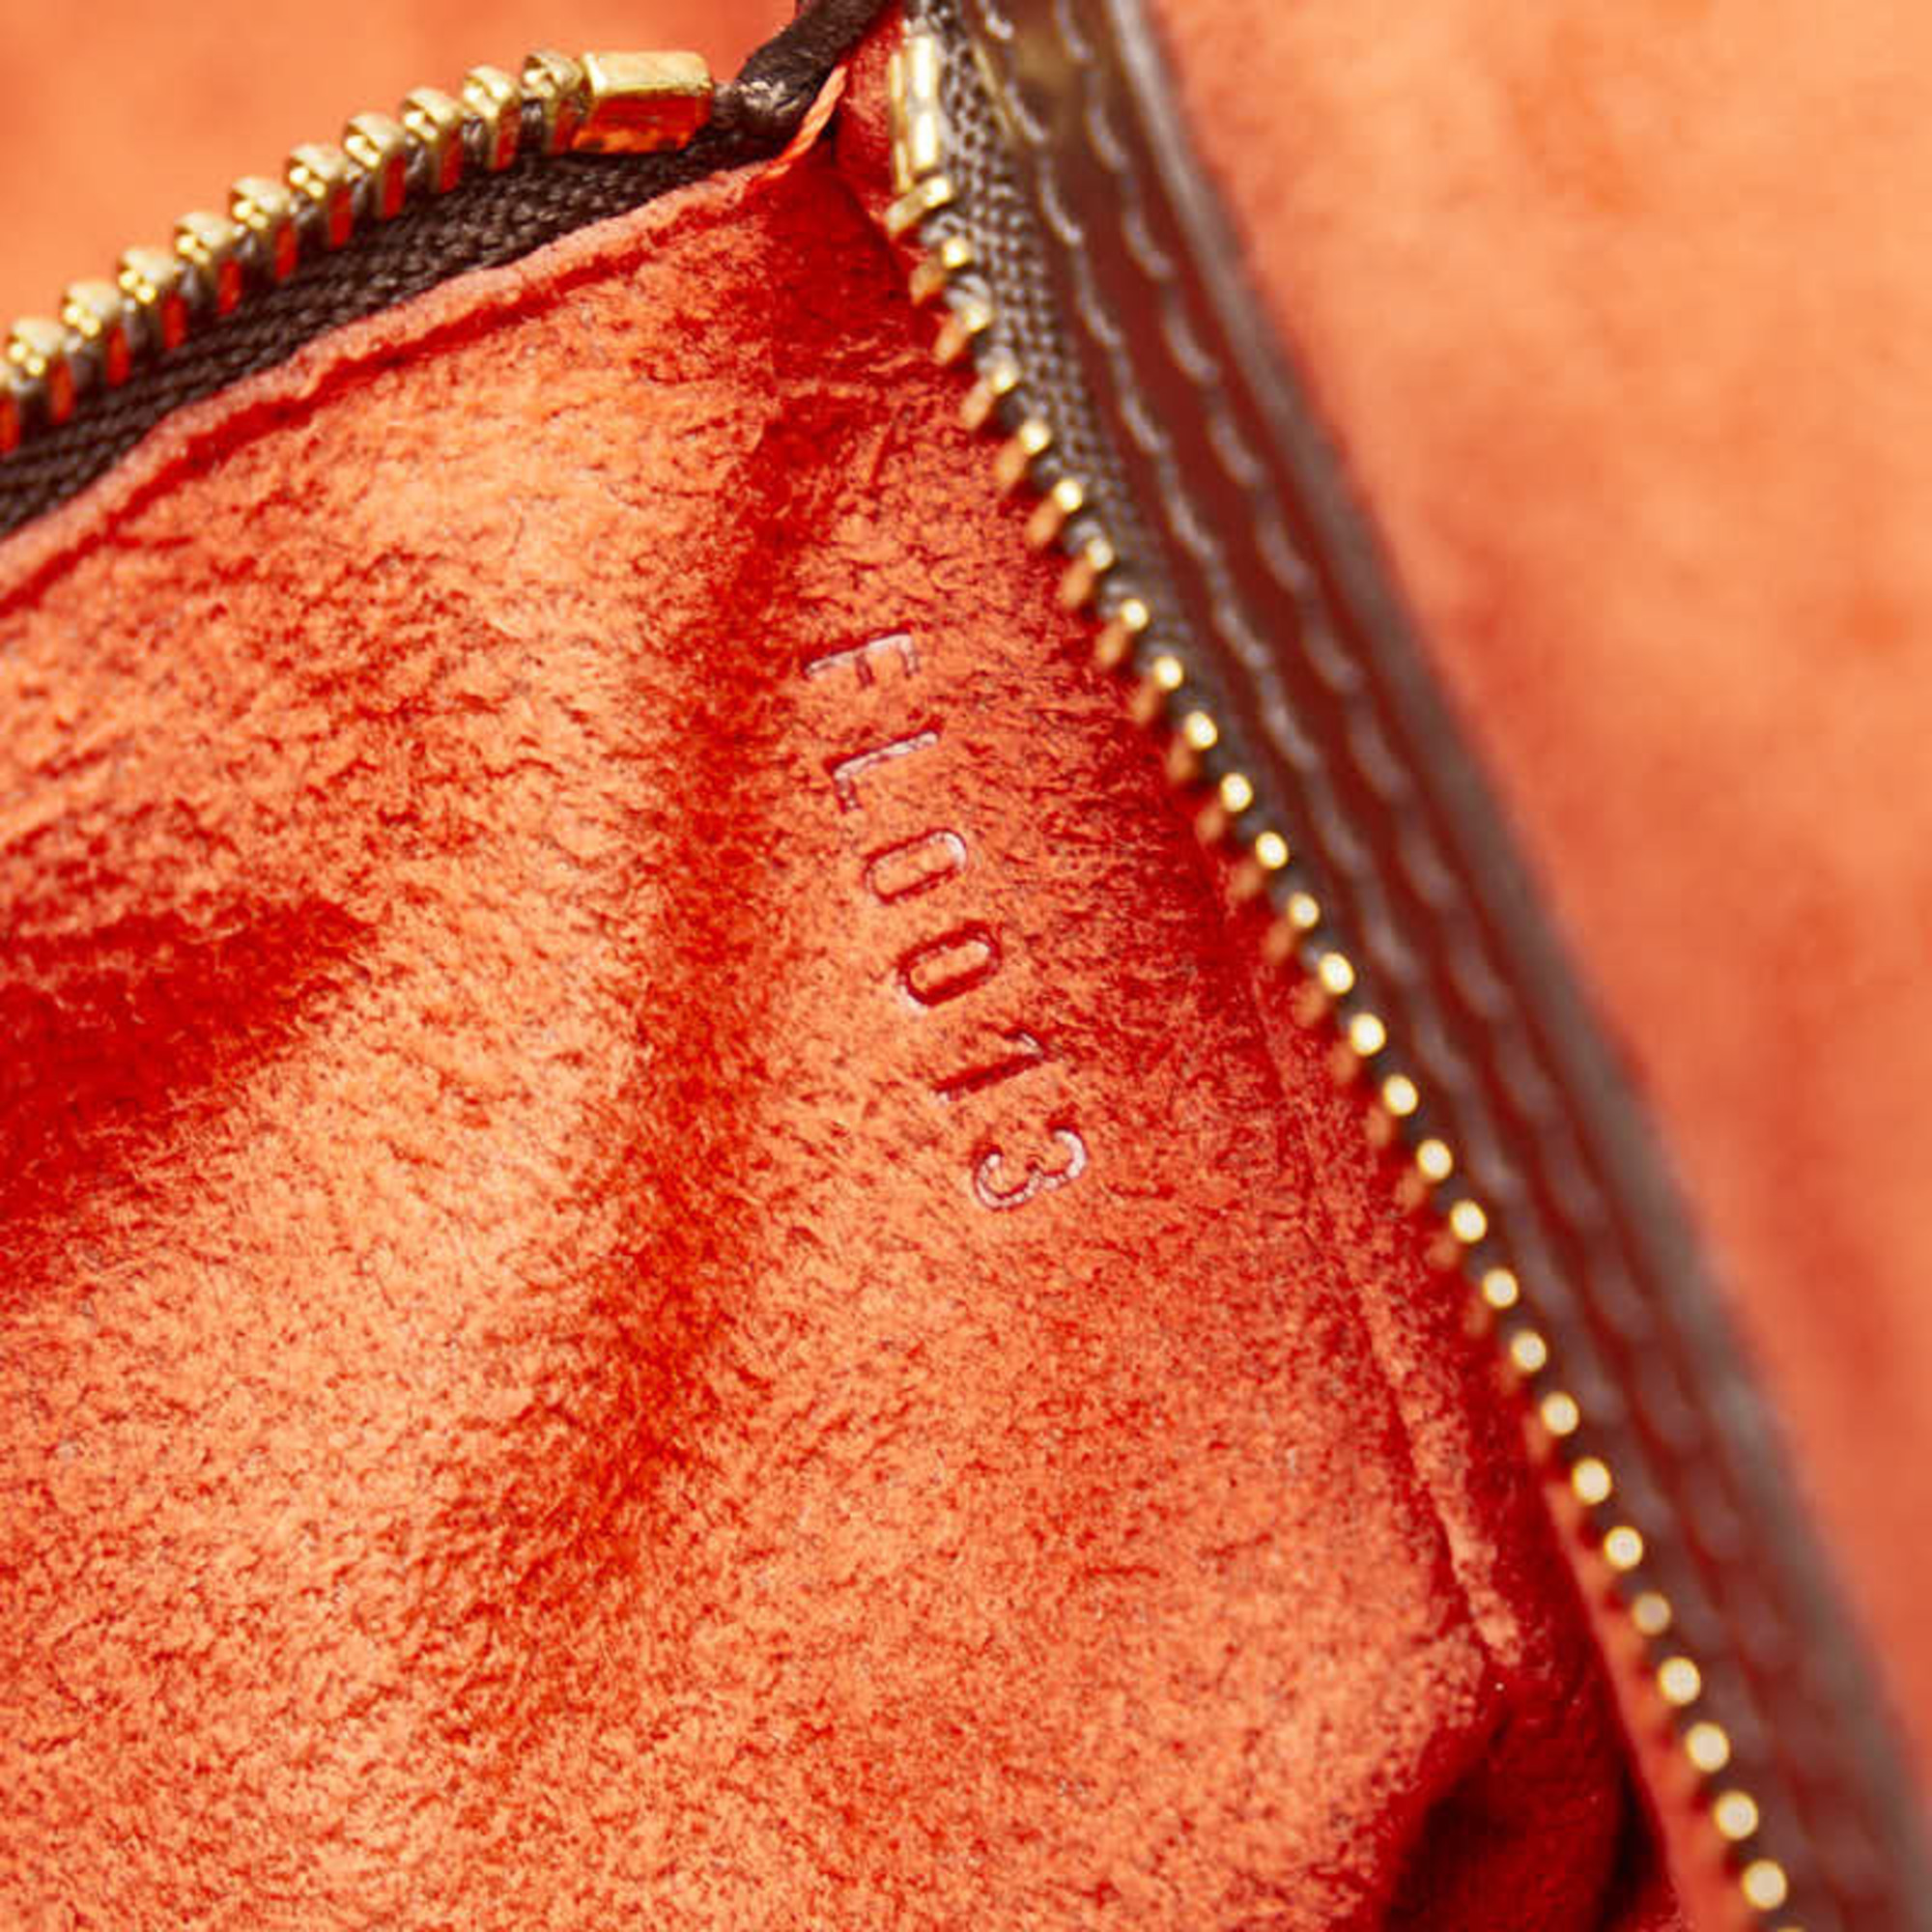 Louis Vuitton Damier Manosque GM Tote Bag N51120 Brown PVC Leather Women's LOUIS VUITTON